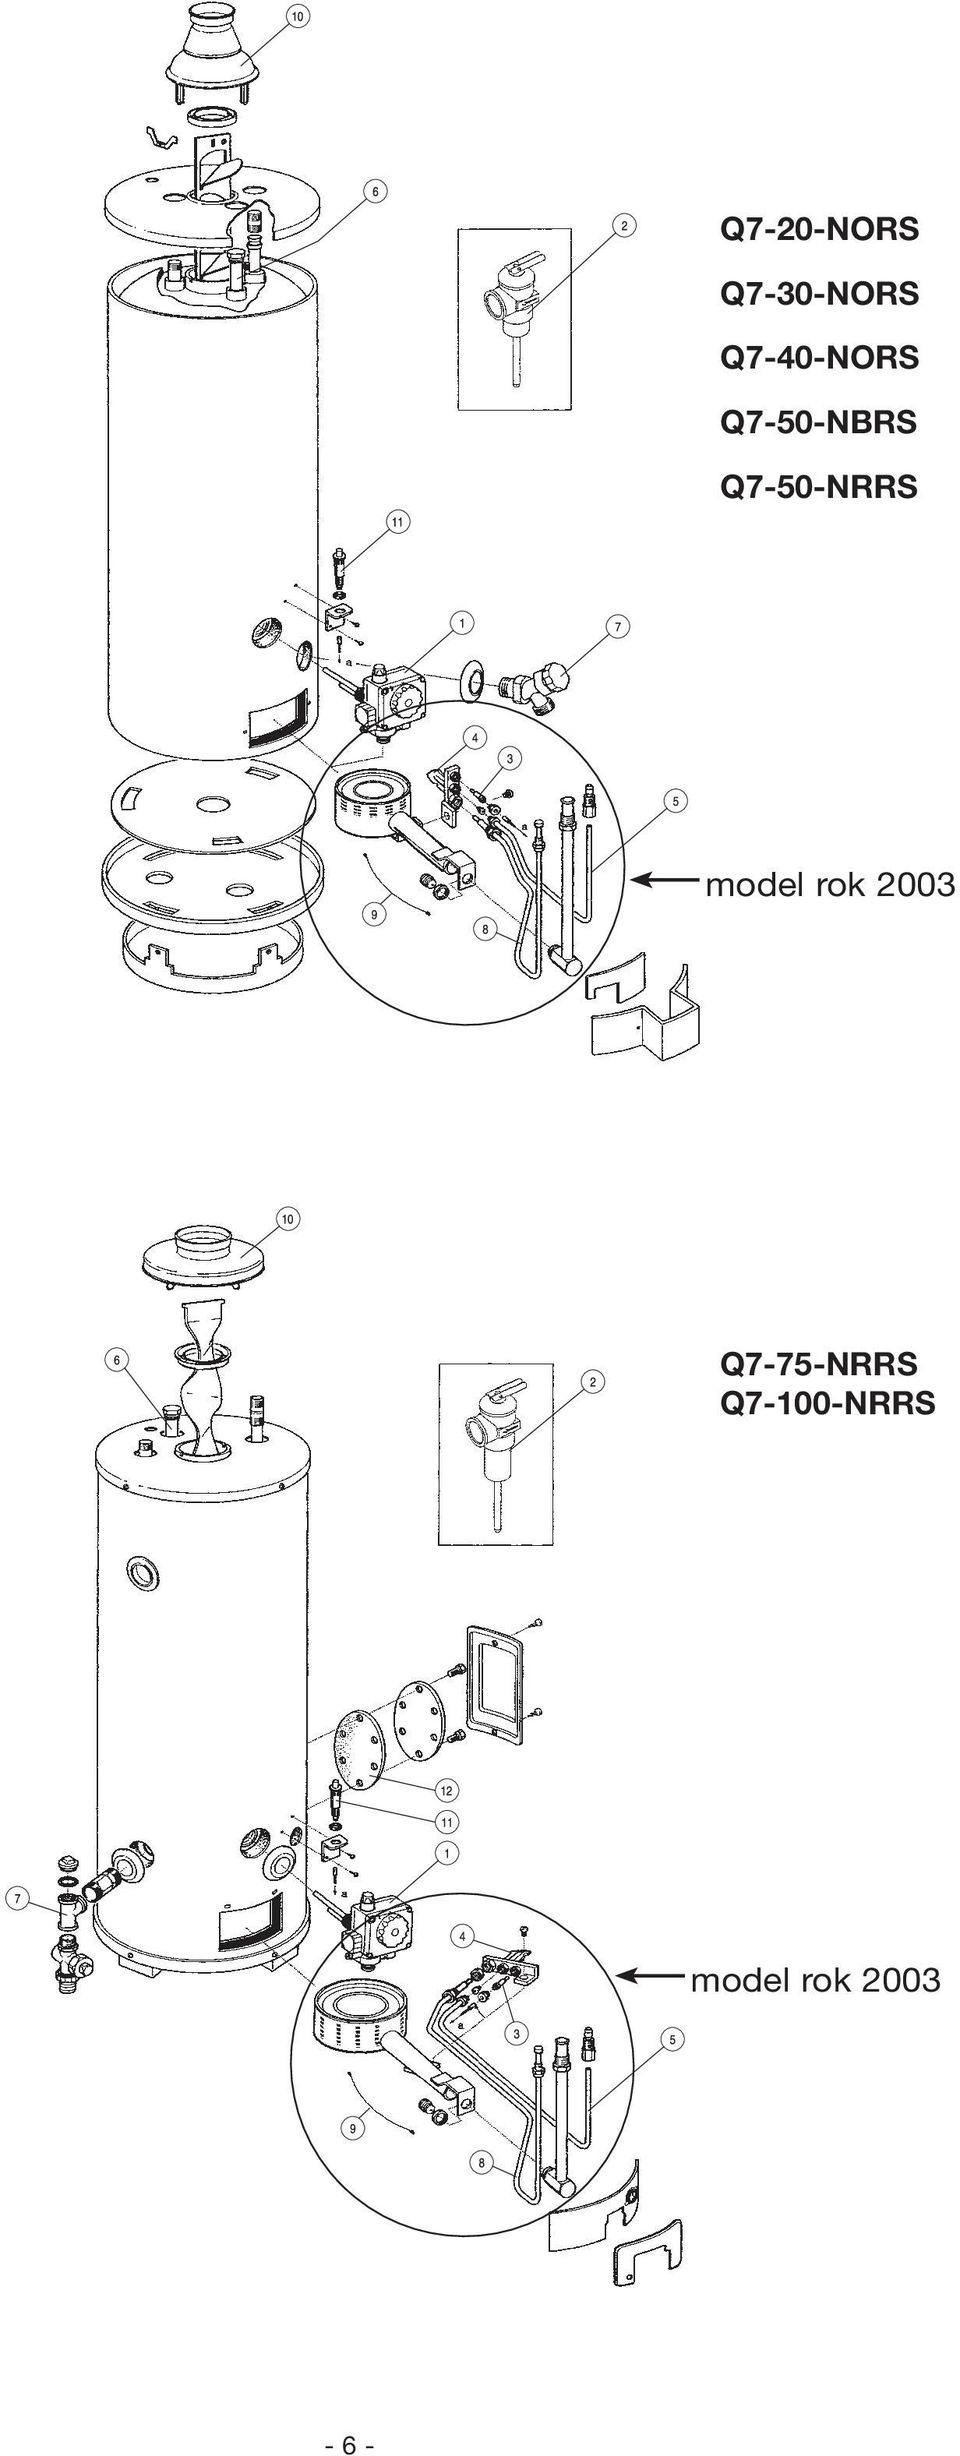 Q7-50-NRRS model rok 2003